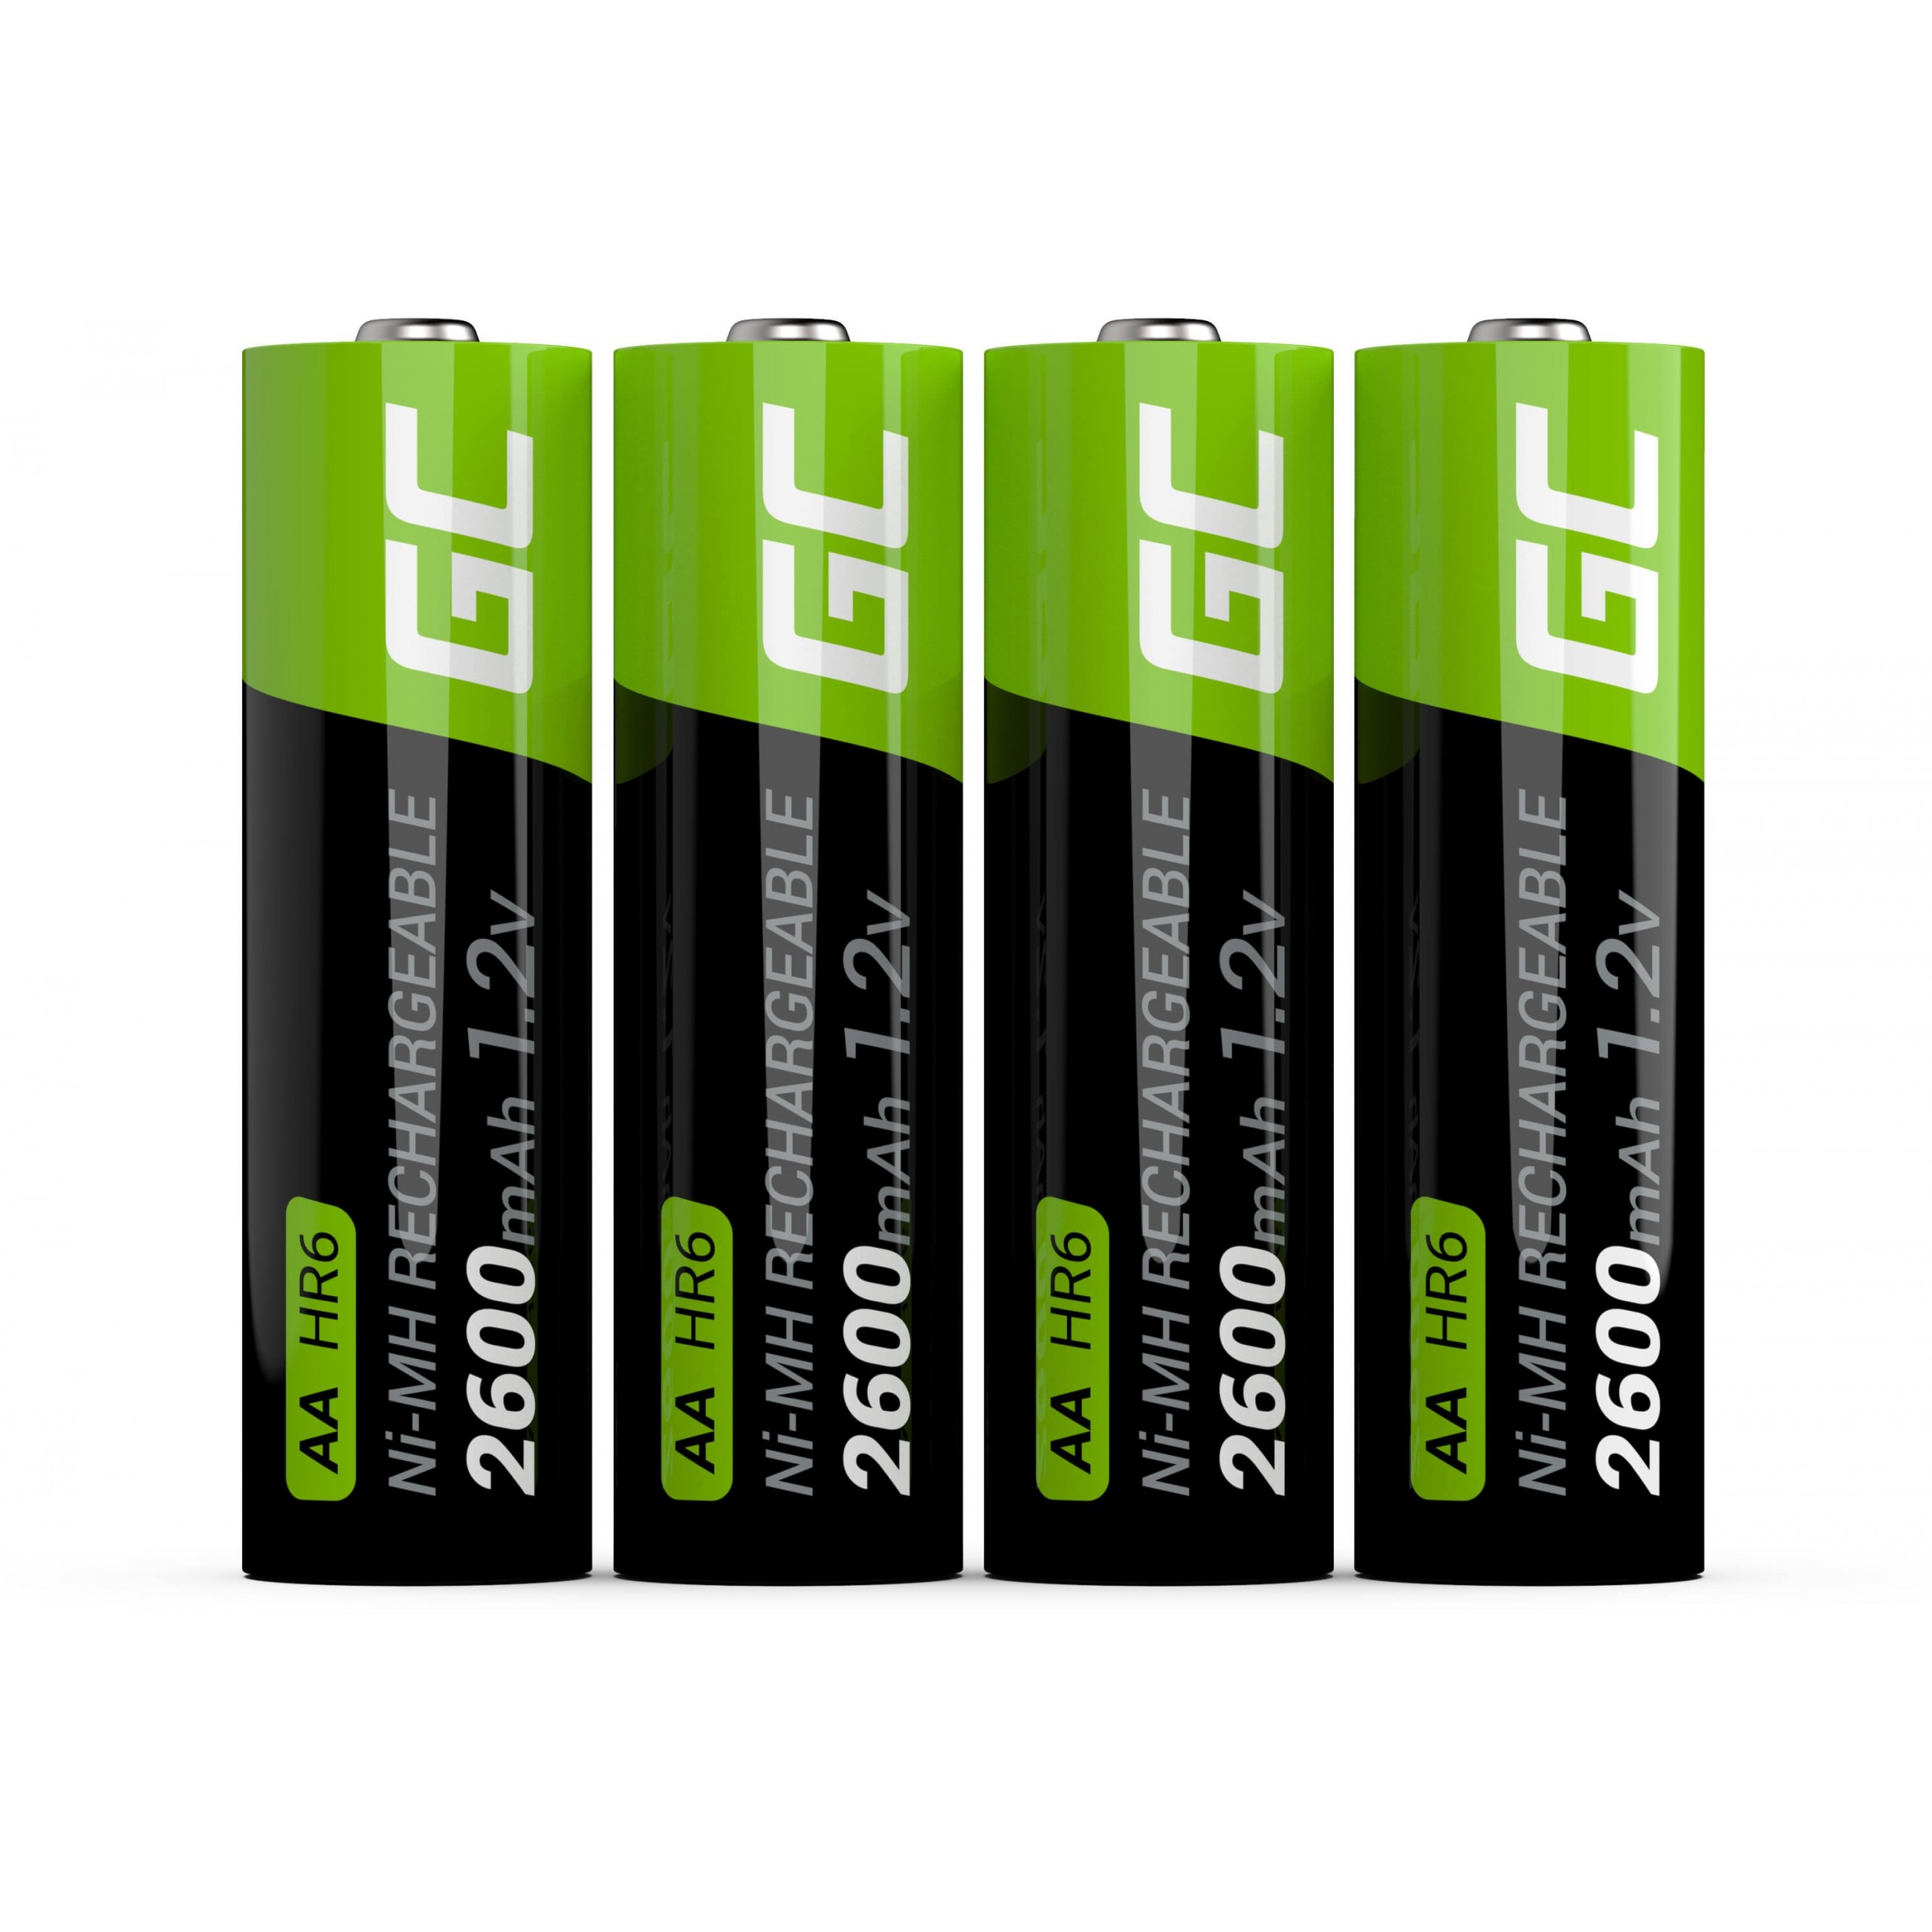 Green Cell GR01, Akkus & Batterien, Green Cell GR01 GR01 (BILD2)